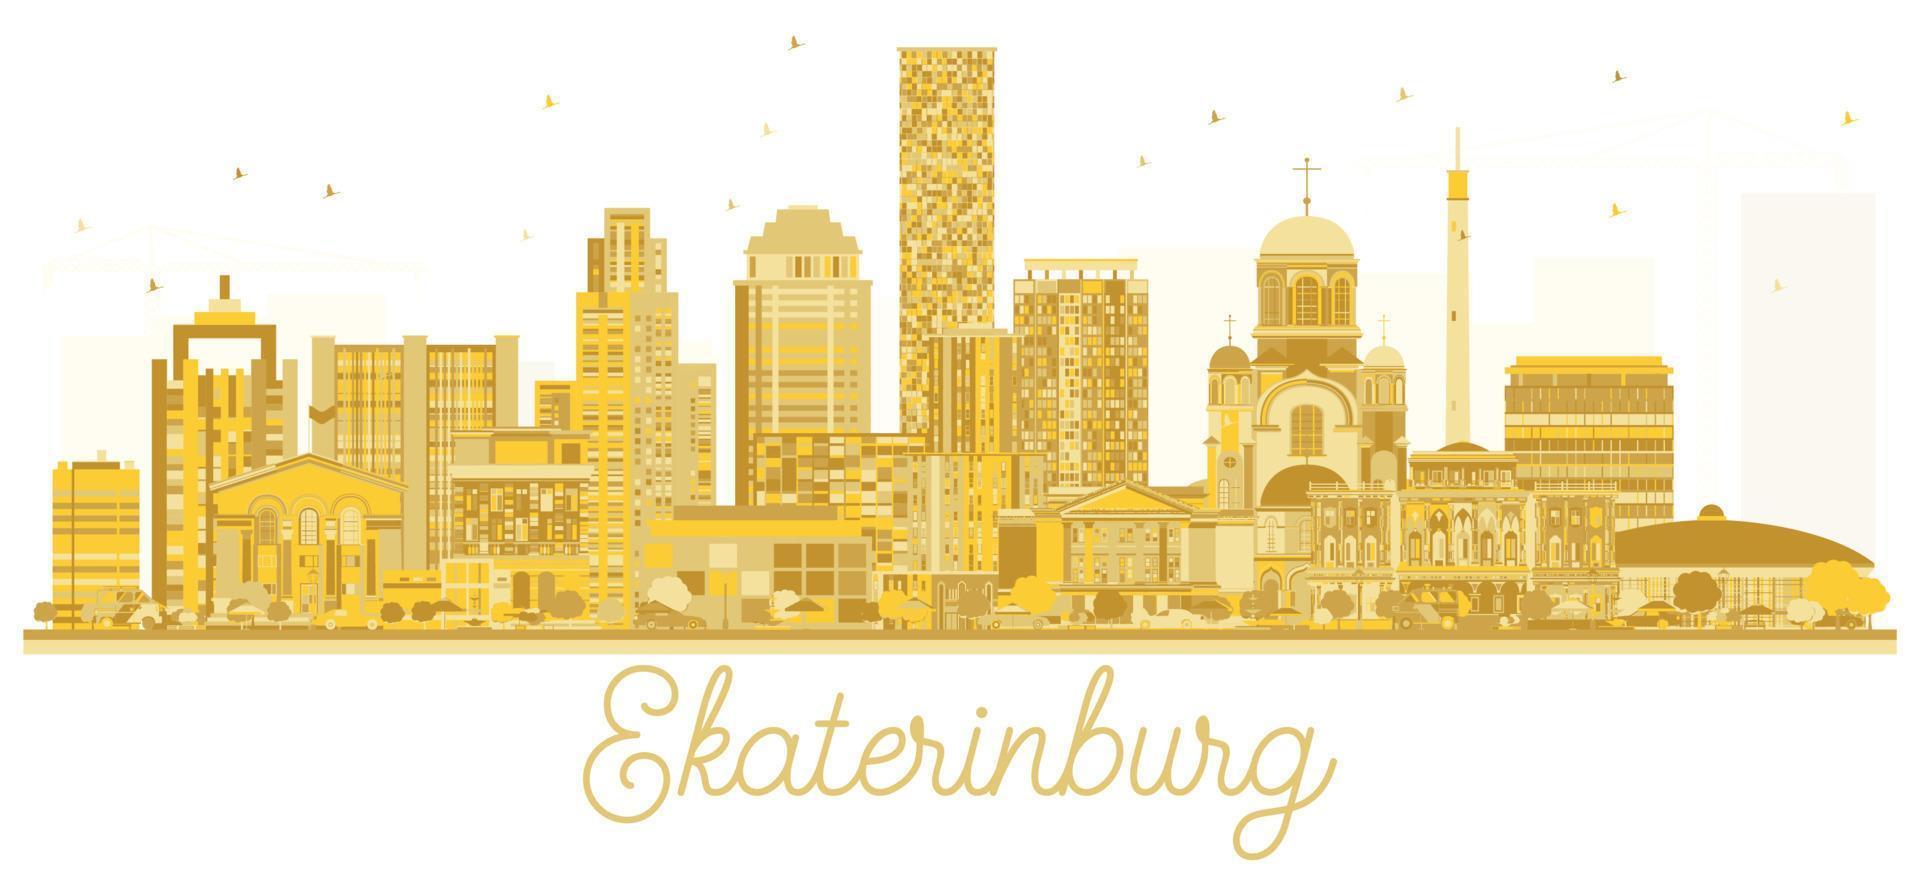 Yekaterinburg Russia City skyline golden silhouette. vector